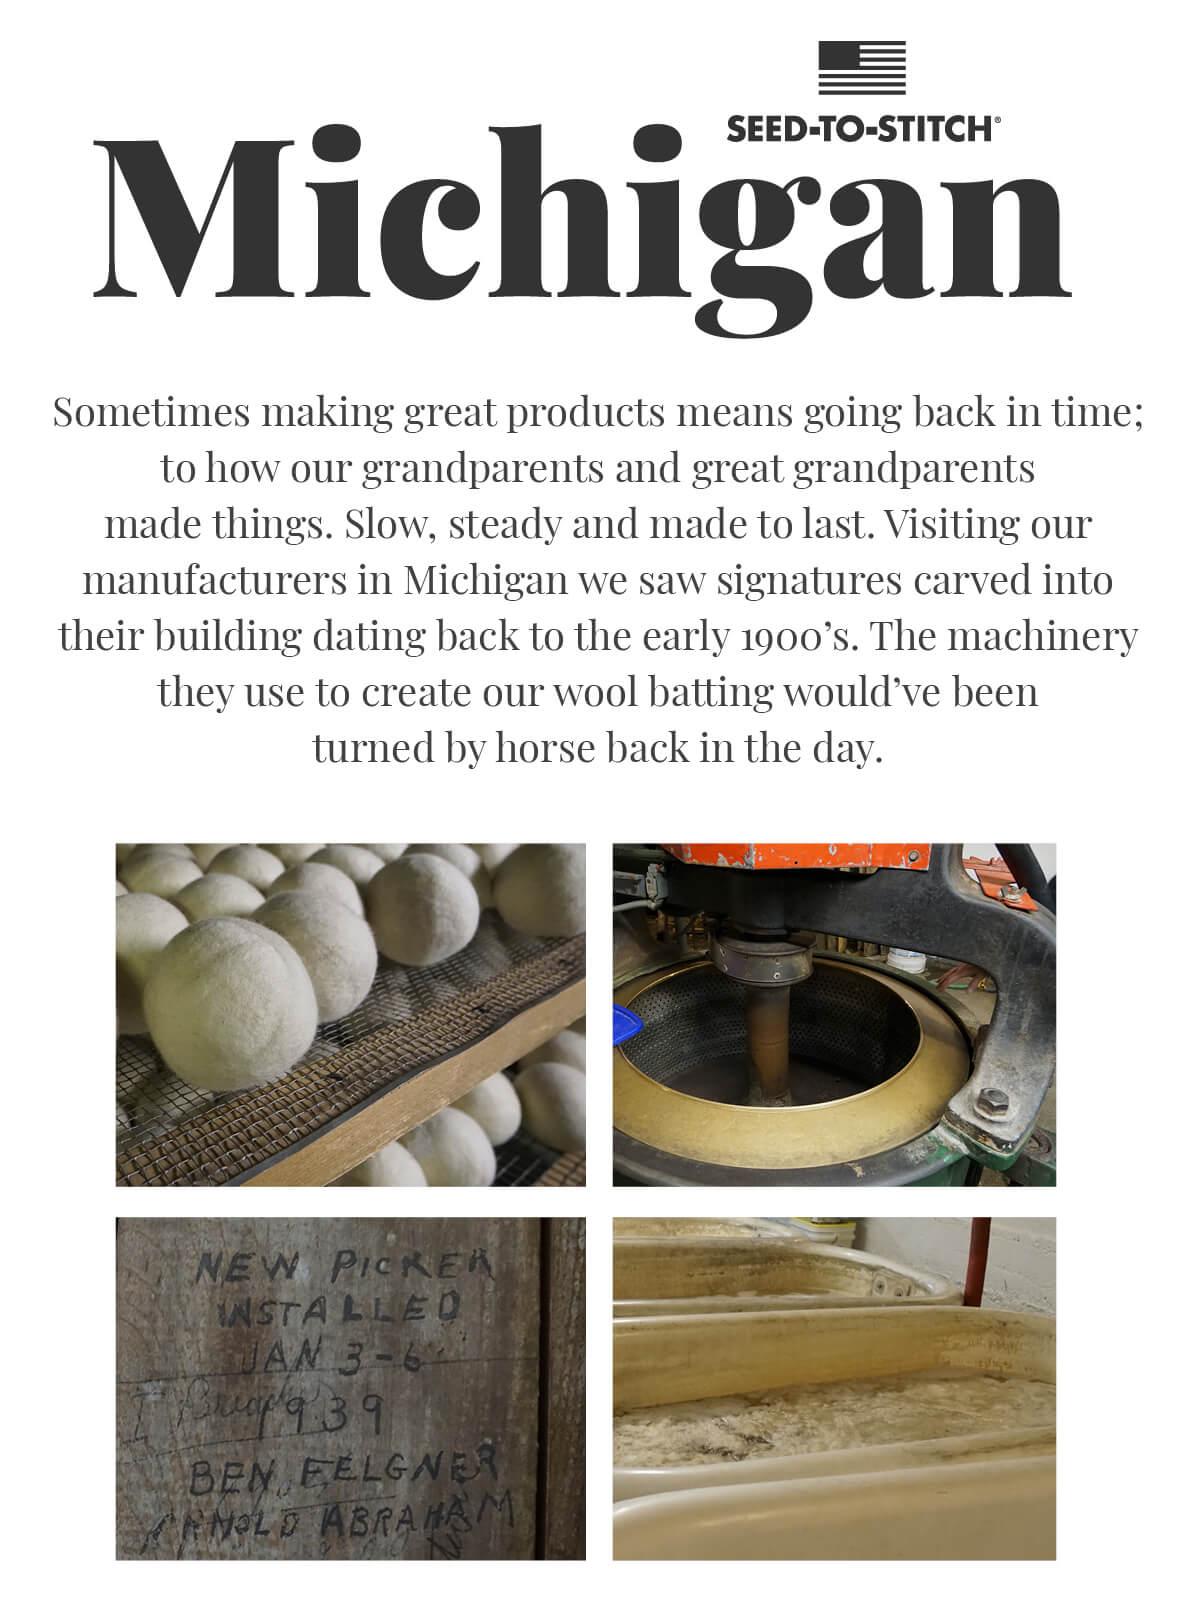 Michigan manufacturing